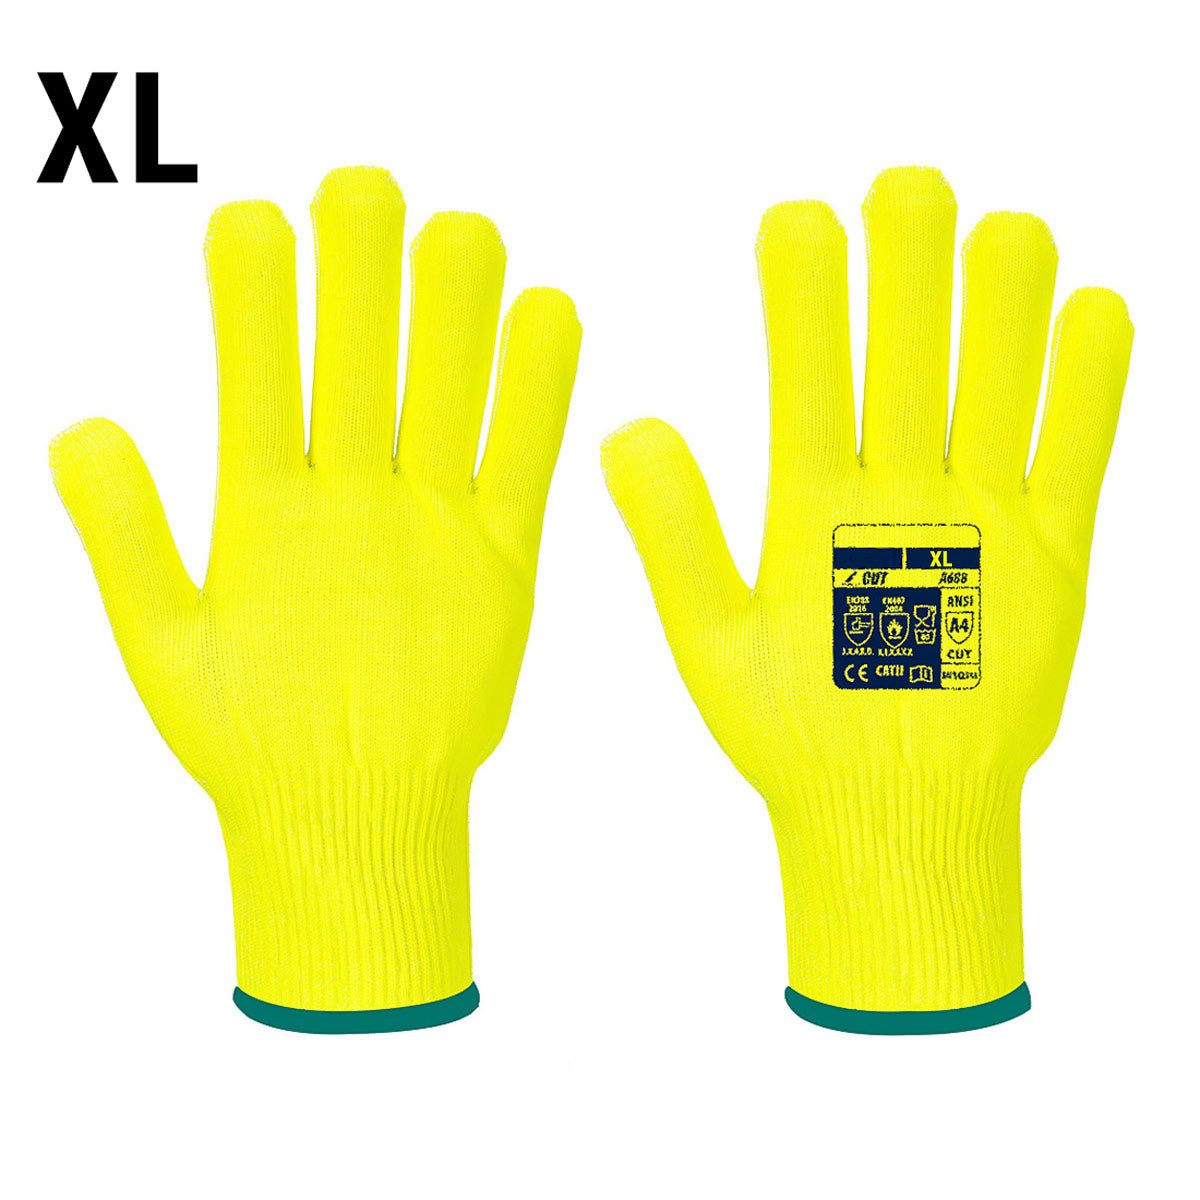 Kuttbestandige hansker Pro Cut - Gul - Størrelse: XL